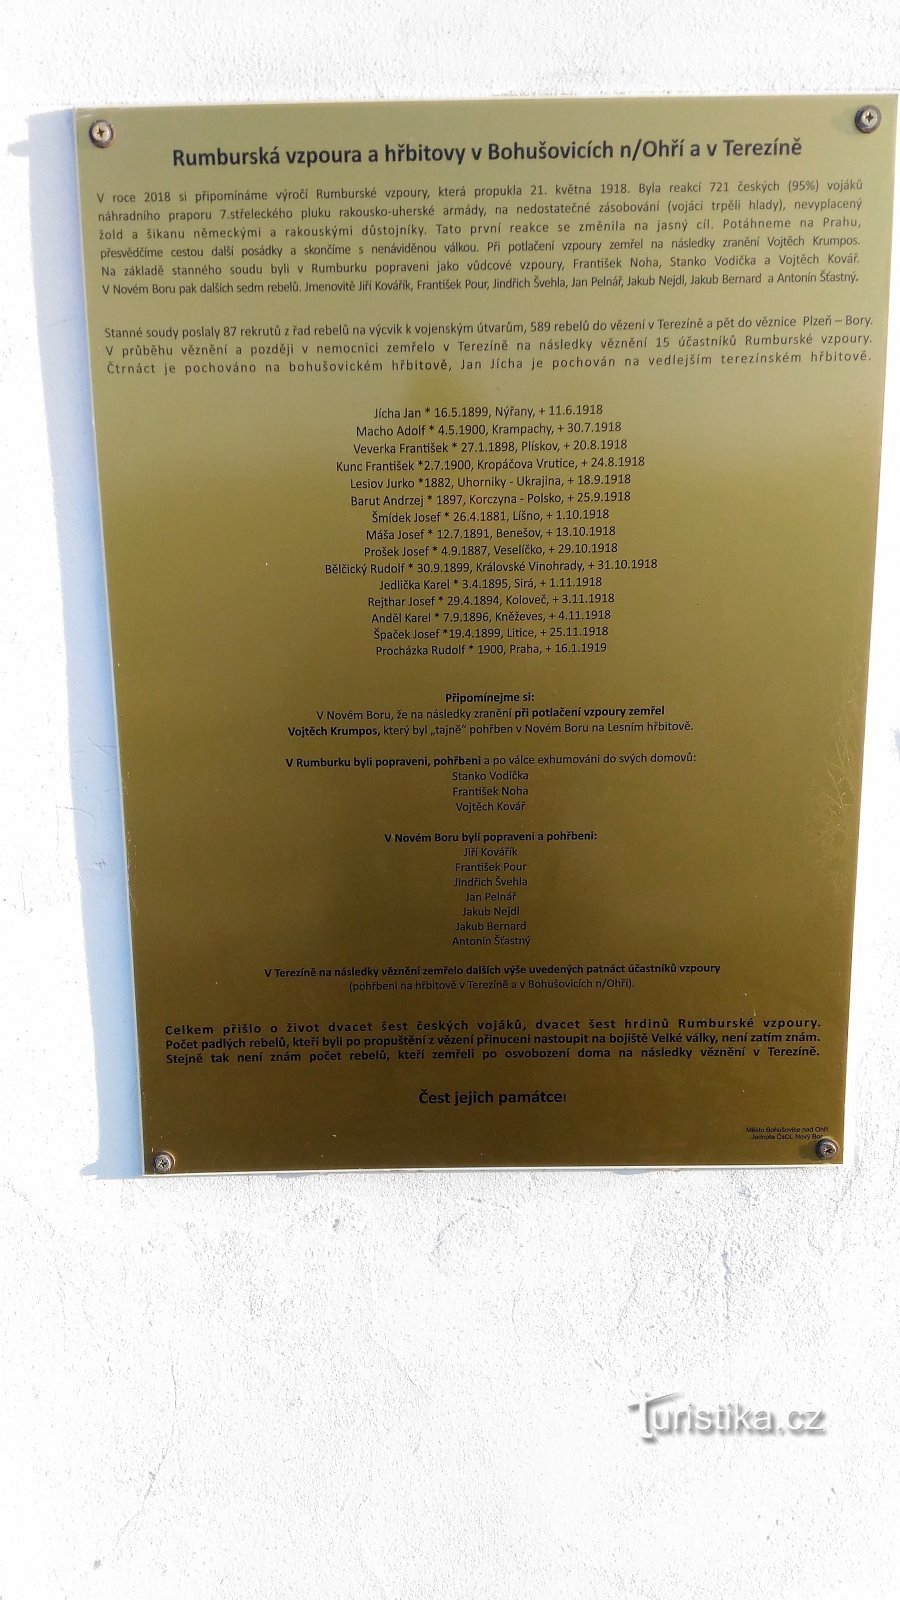 Cimetière militaire de Bohušovice nad Ohří.